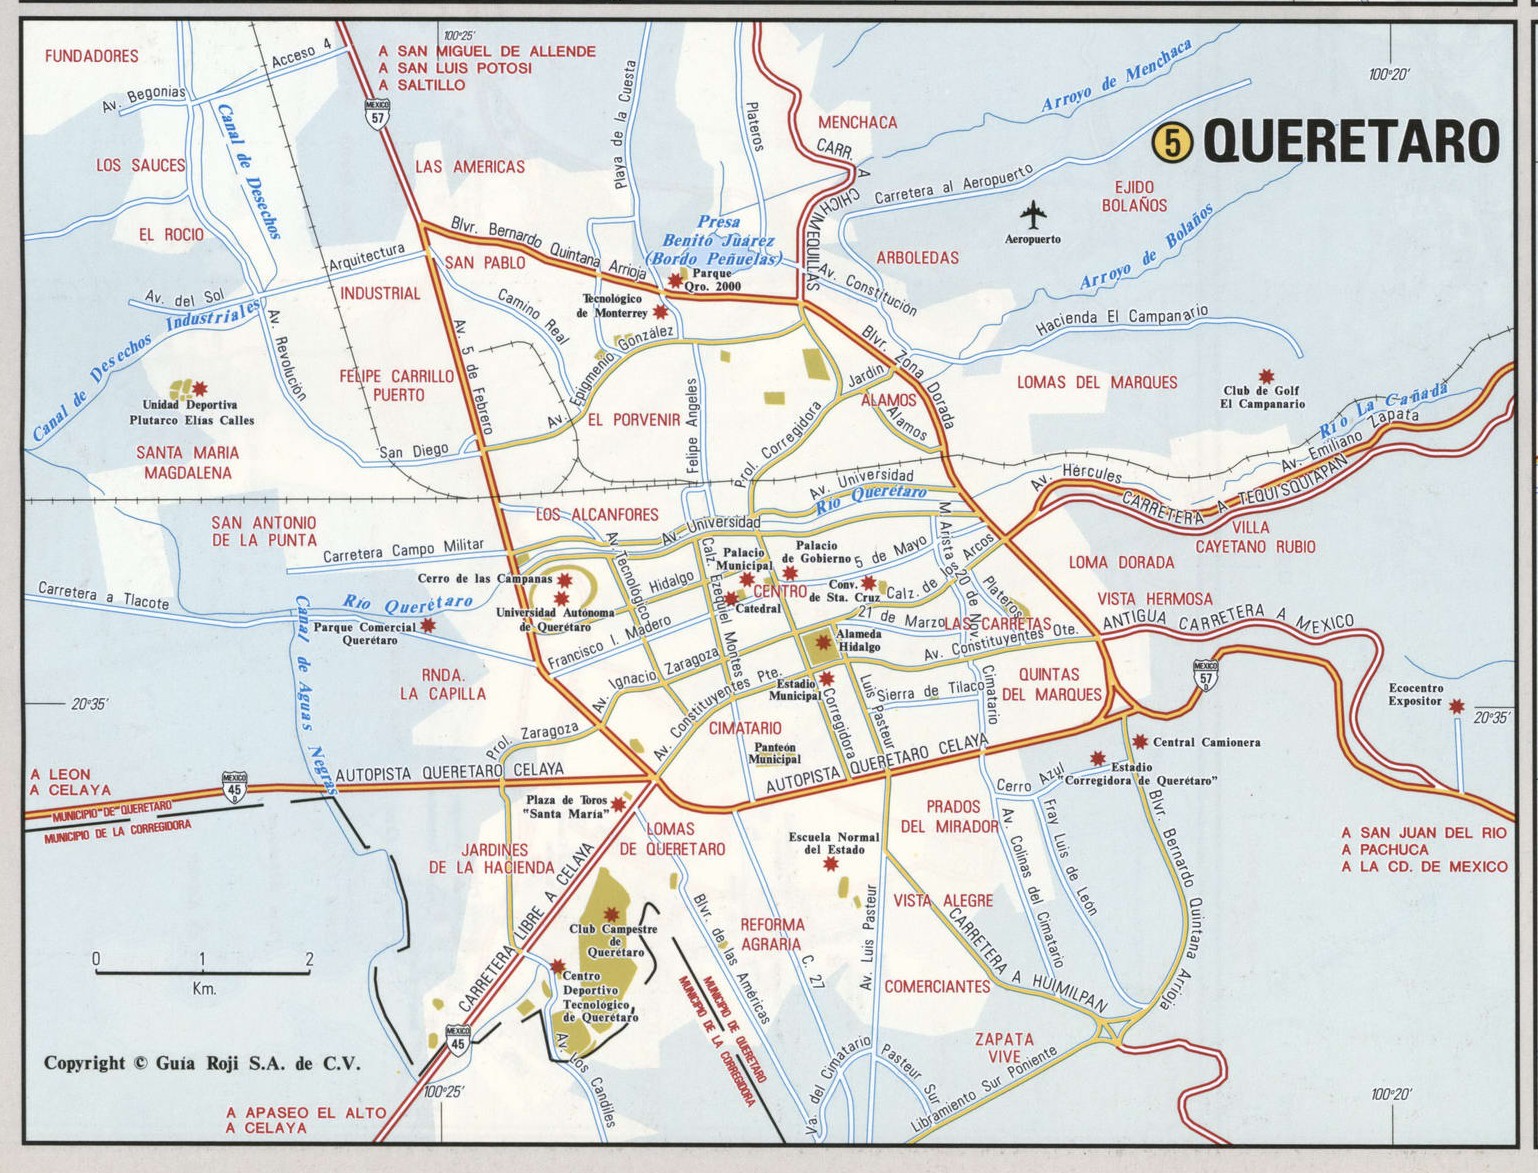 Queretaro city map